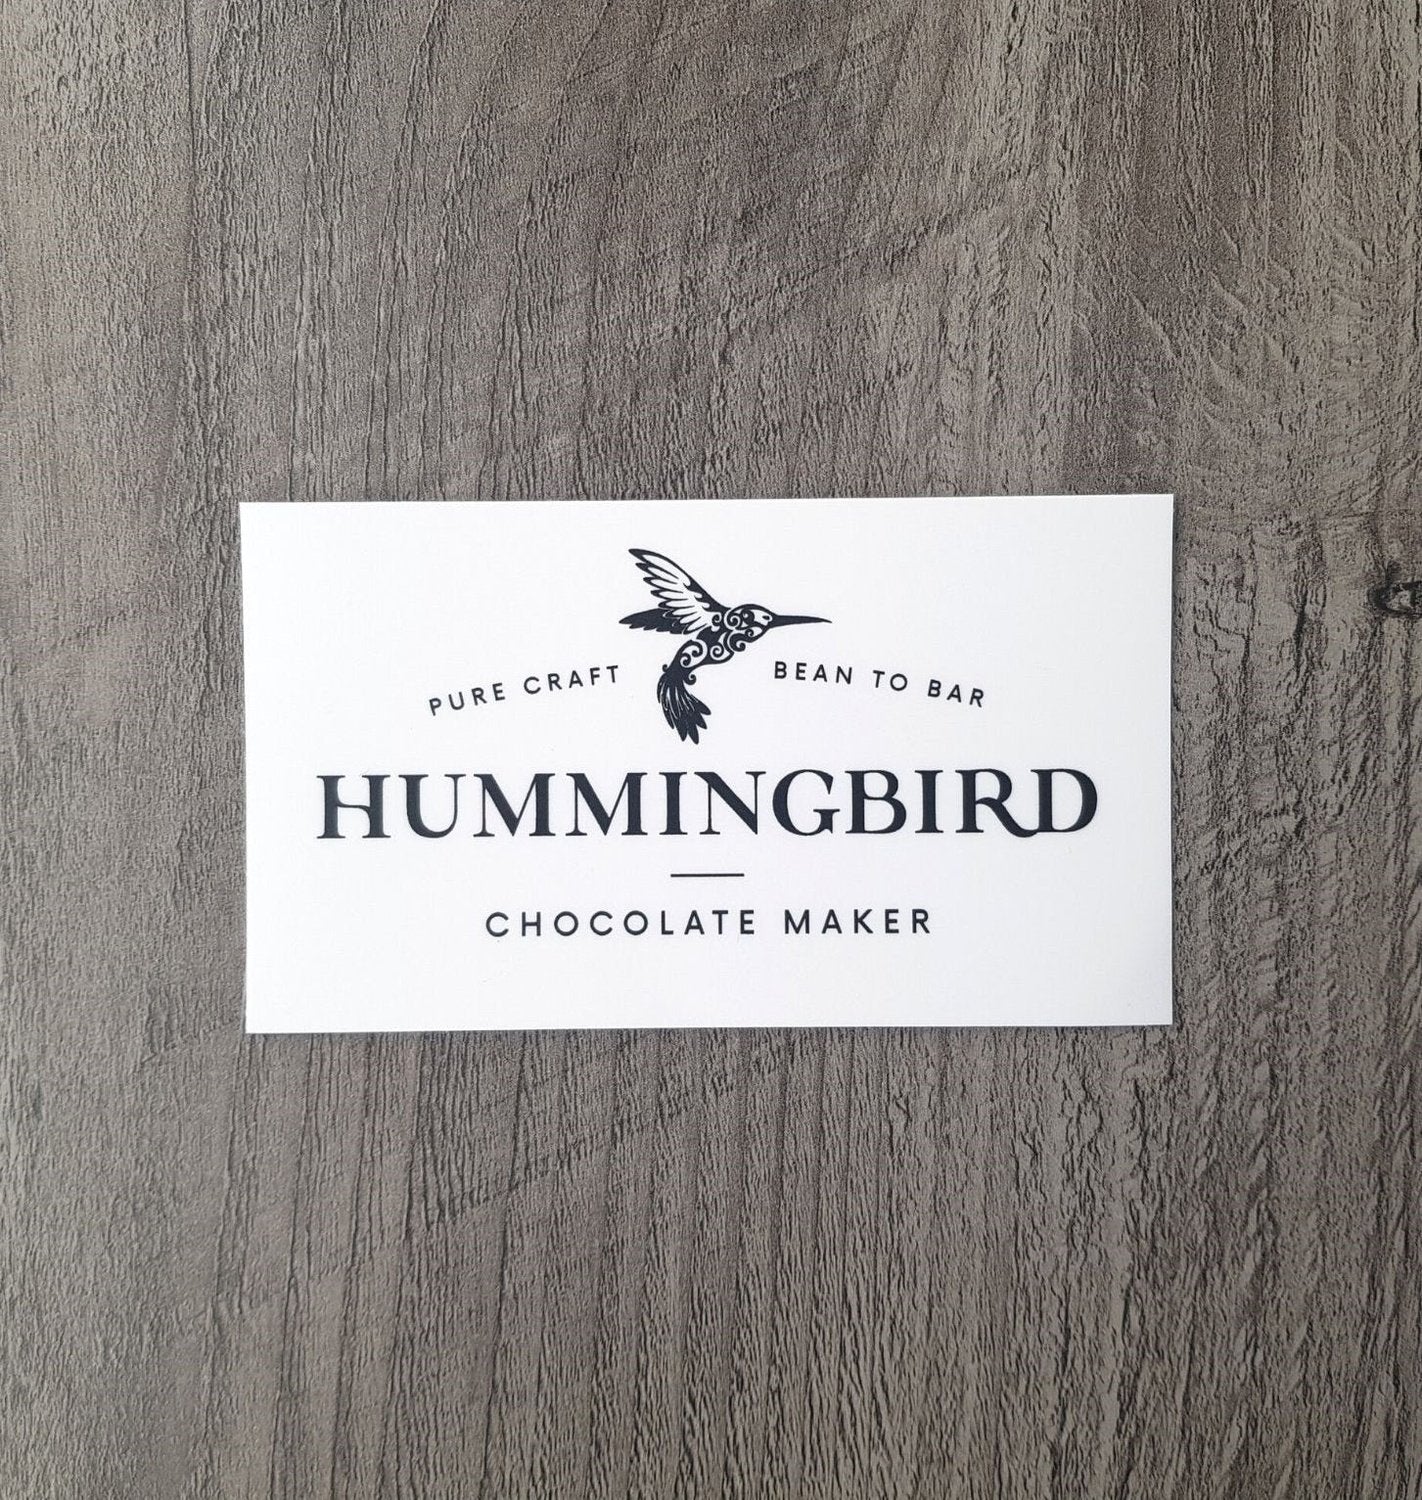 Hummingbird Chocolate Maker logo sticker